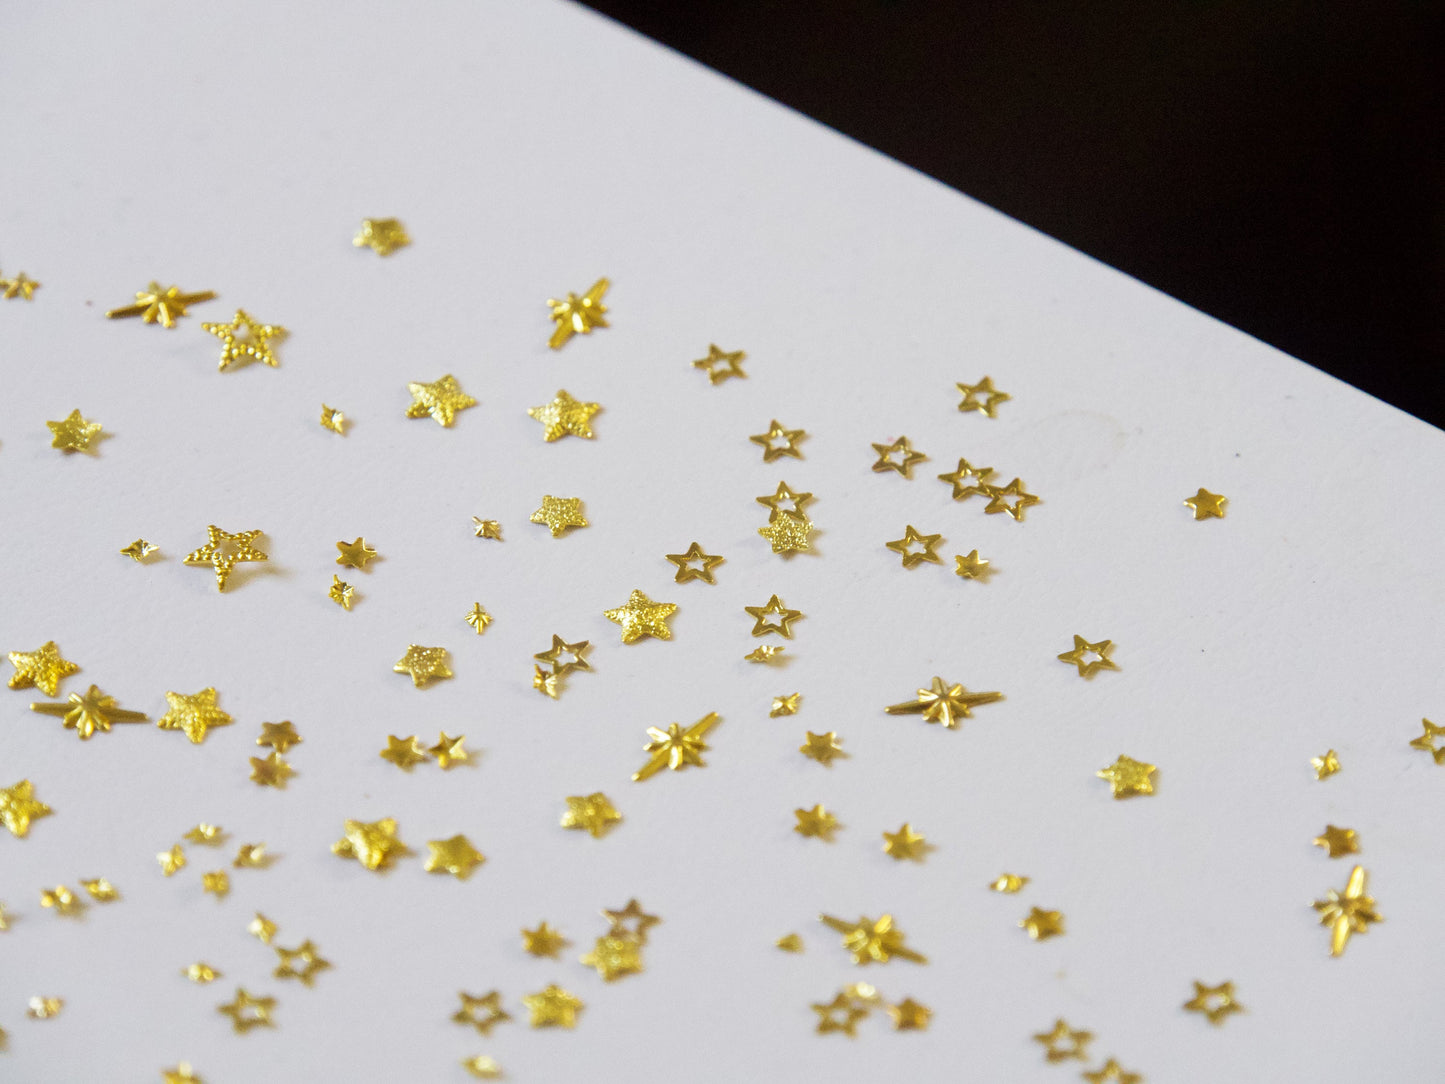 100pcs Gold Star Rivet Nail Decals/ Christmas Starry Theme Nail Supply Metallic Studs / Golden Quadrangular Stars Miniature